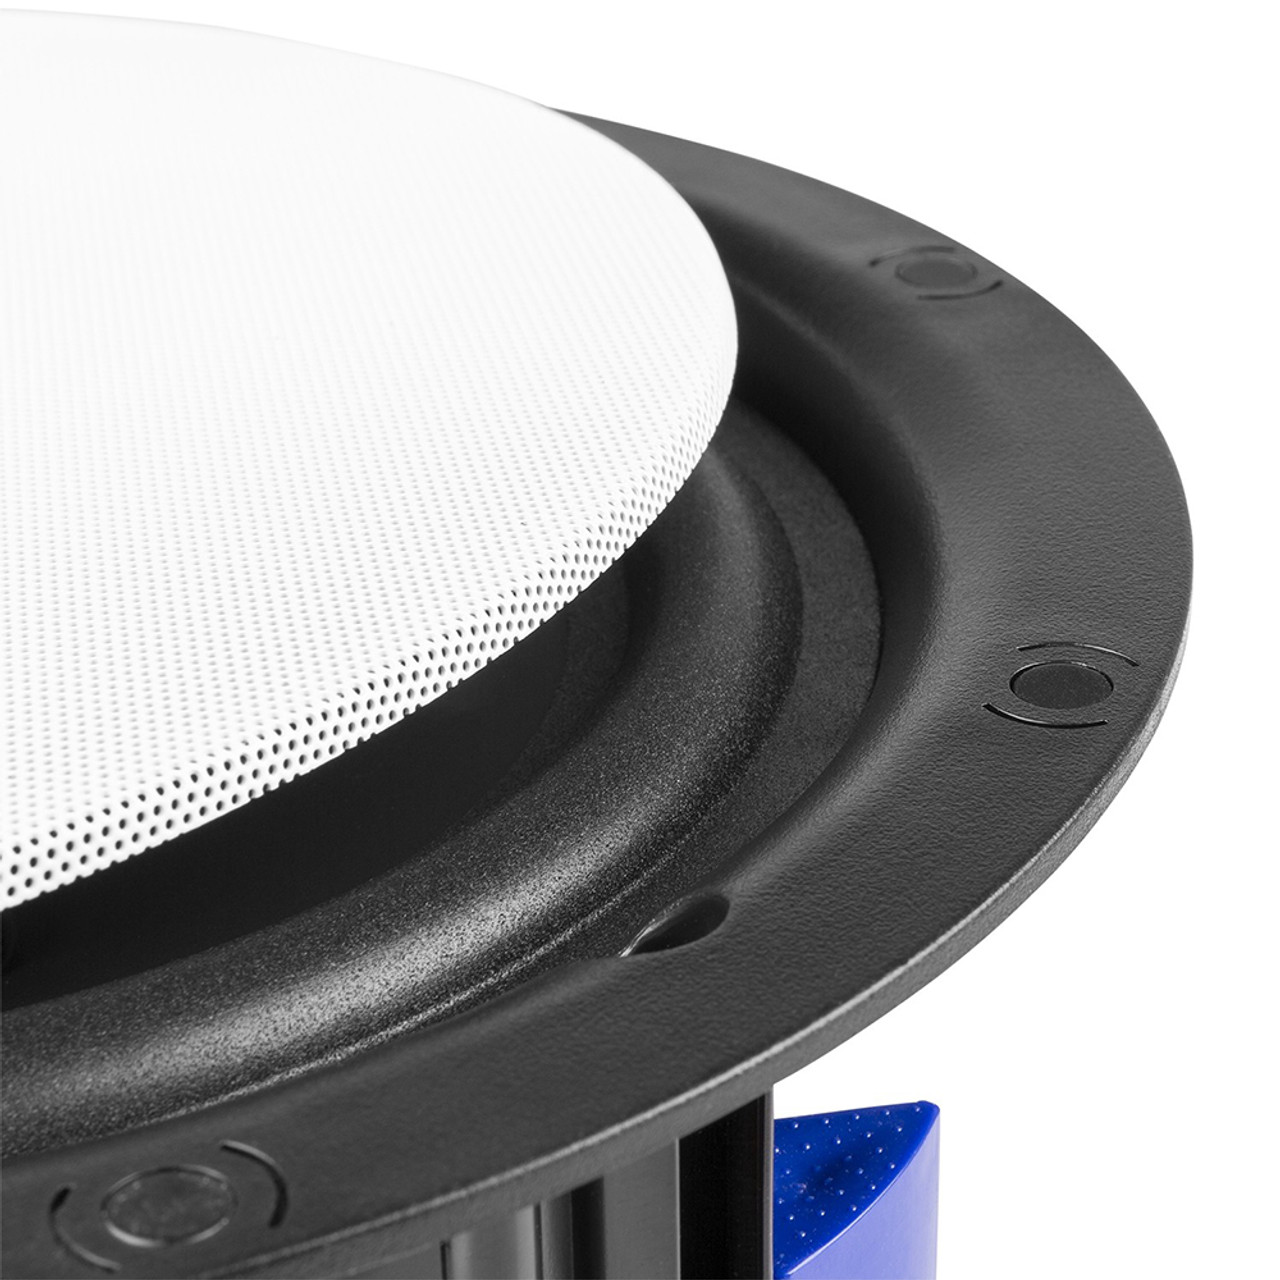 Power Dynamics NCBT5 5.25" Low Profile Powered Bluetooth In-Ceiling Speakers (Pair)